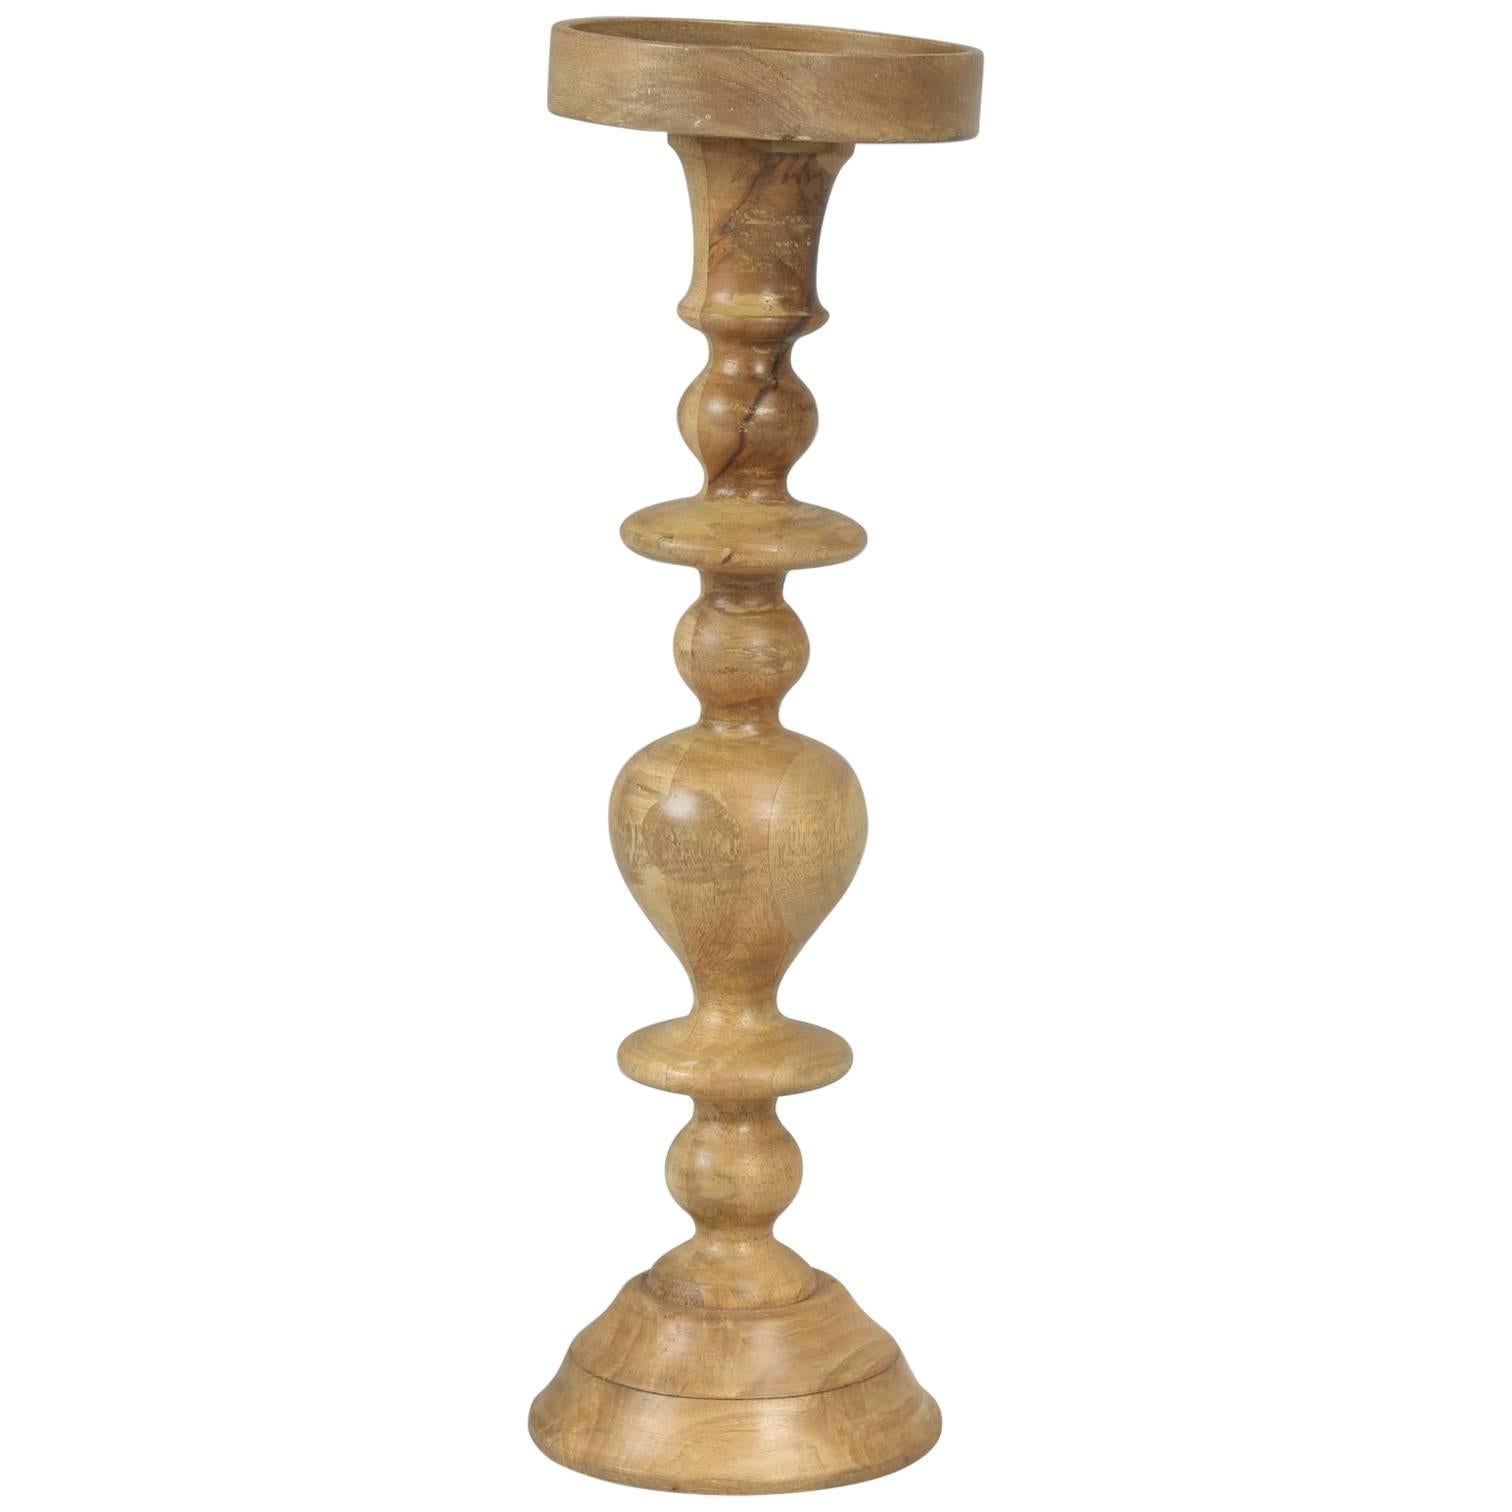 Wooden CandleHolder or Candlestick